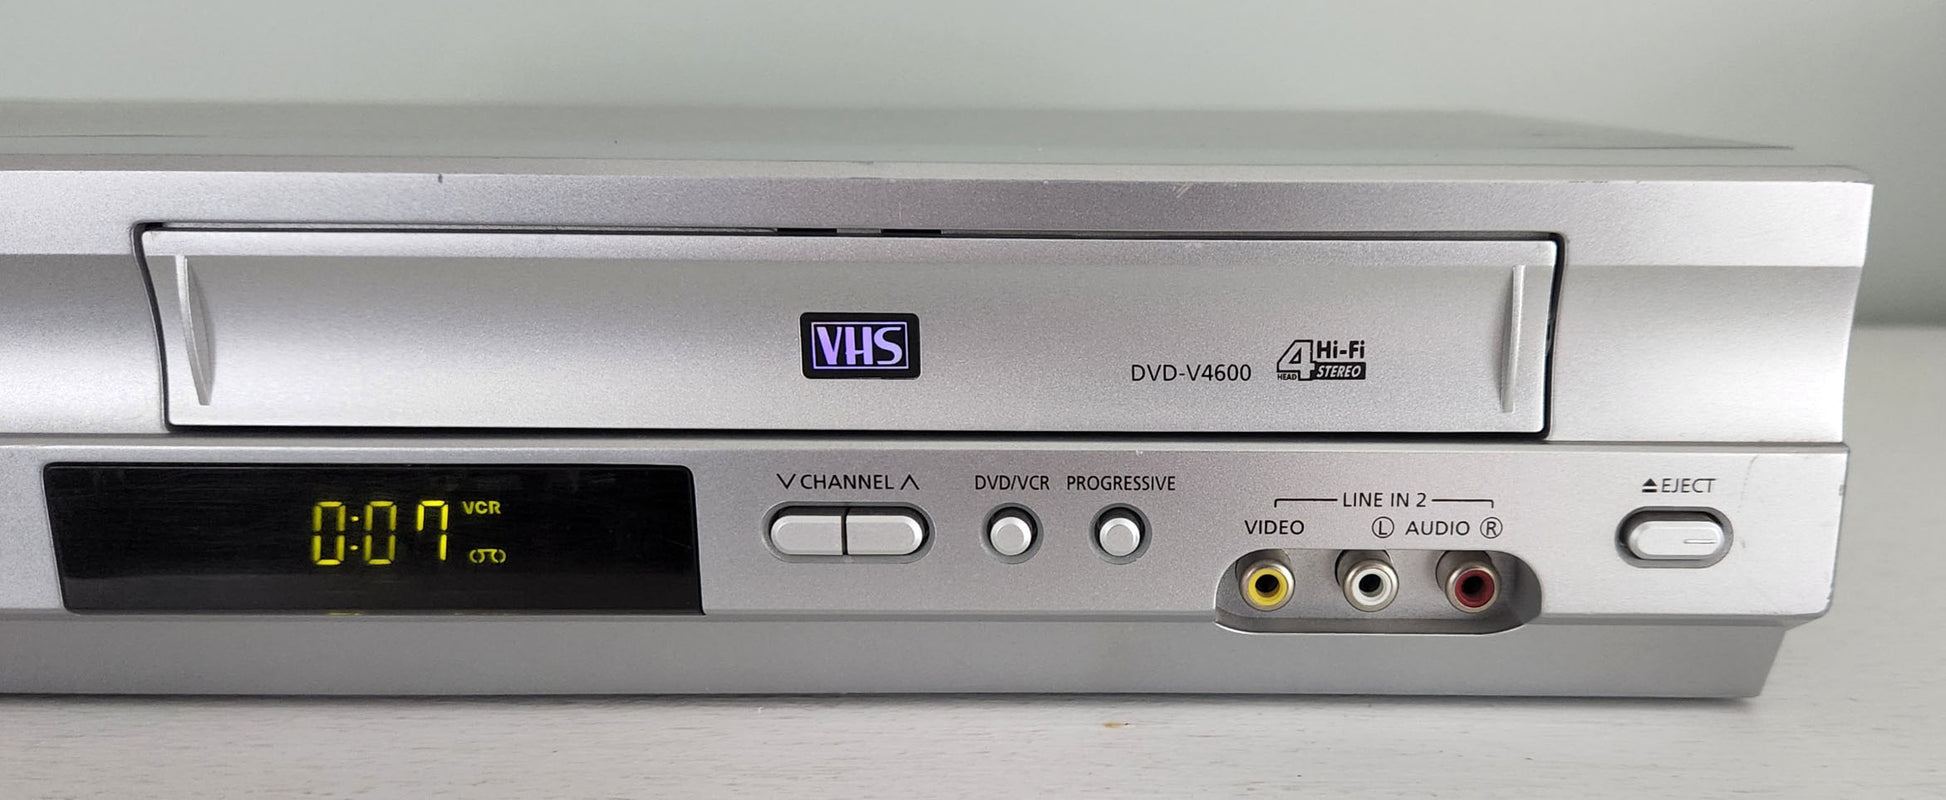 Samsung DVD-V4600A VCR/DVD Player Combo - Right